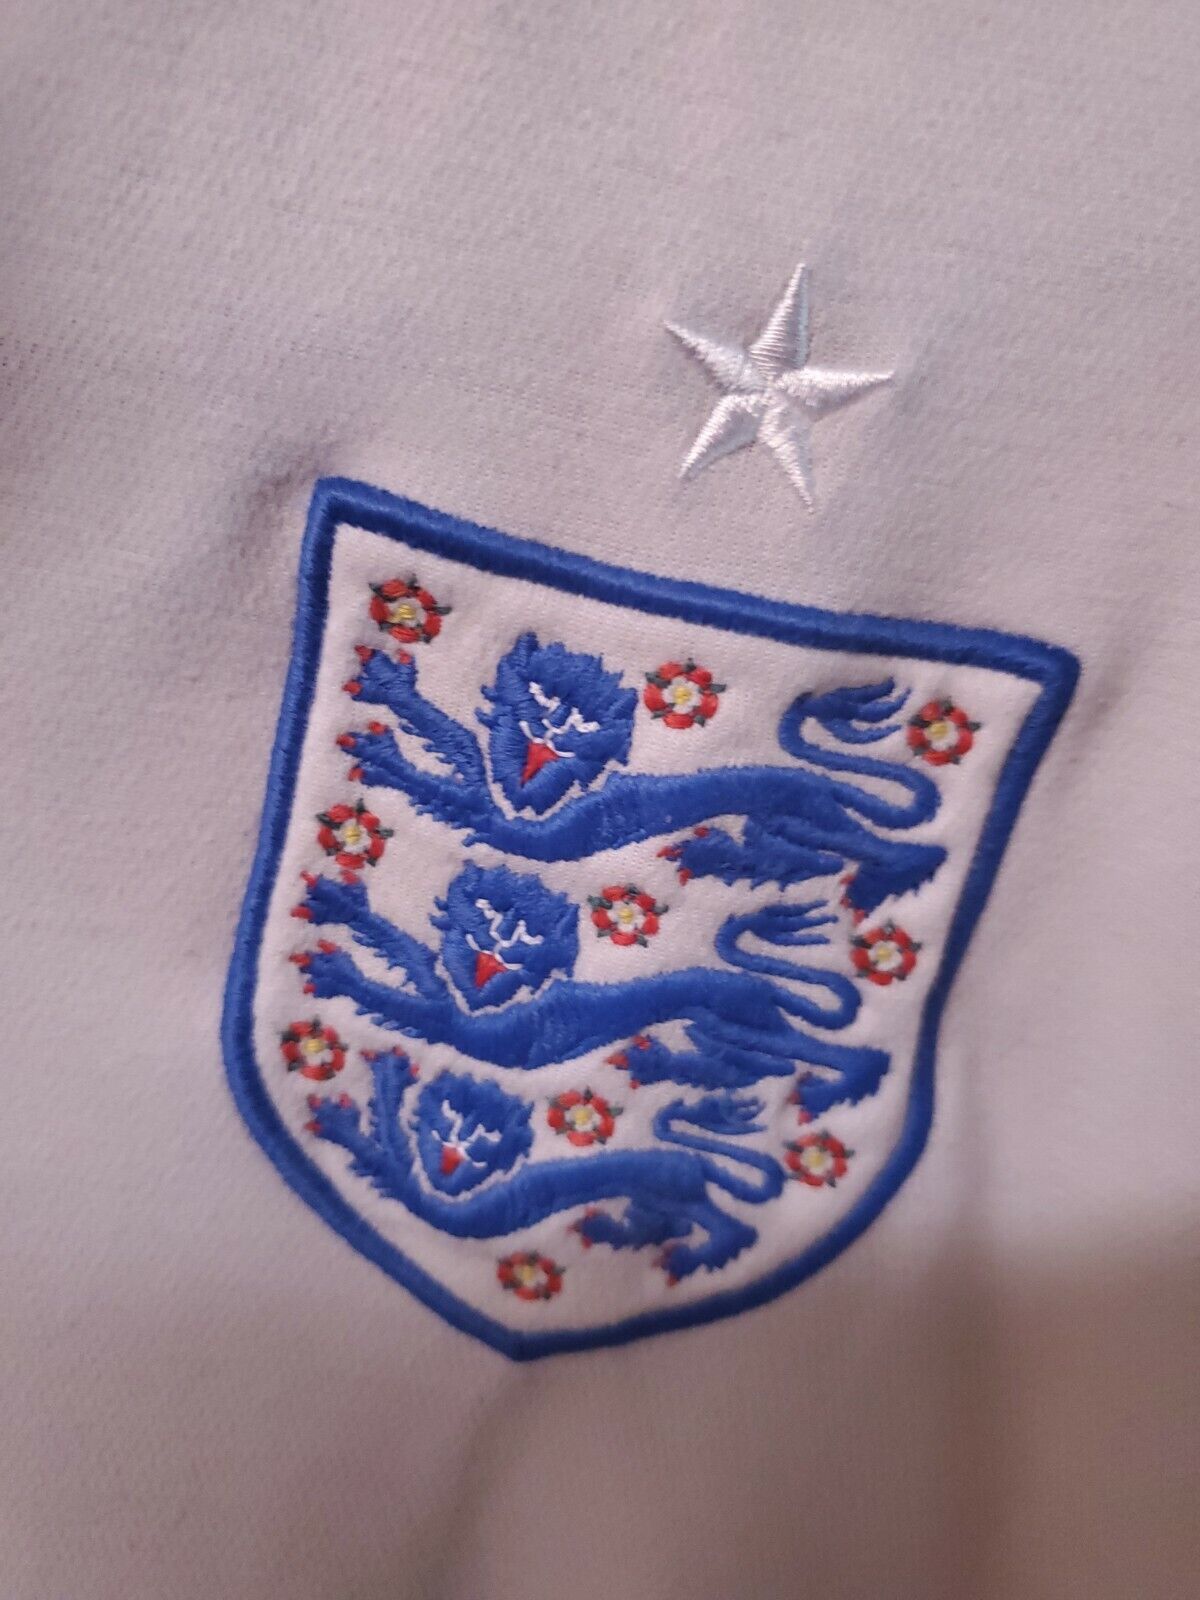 England soccer jersey umbro - image 2